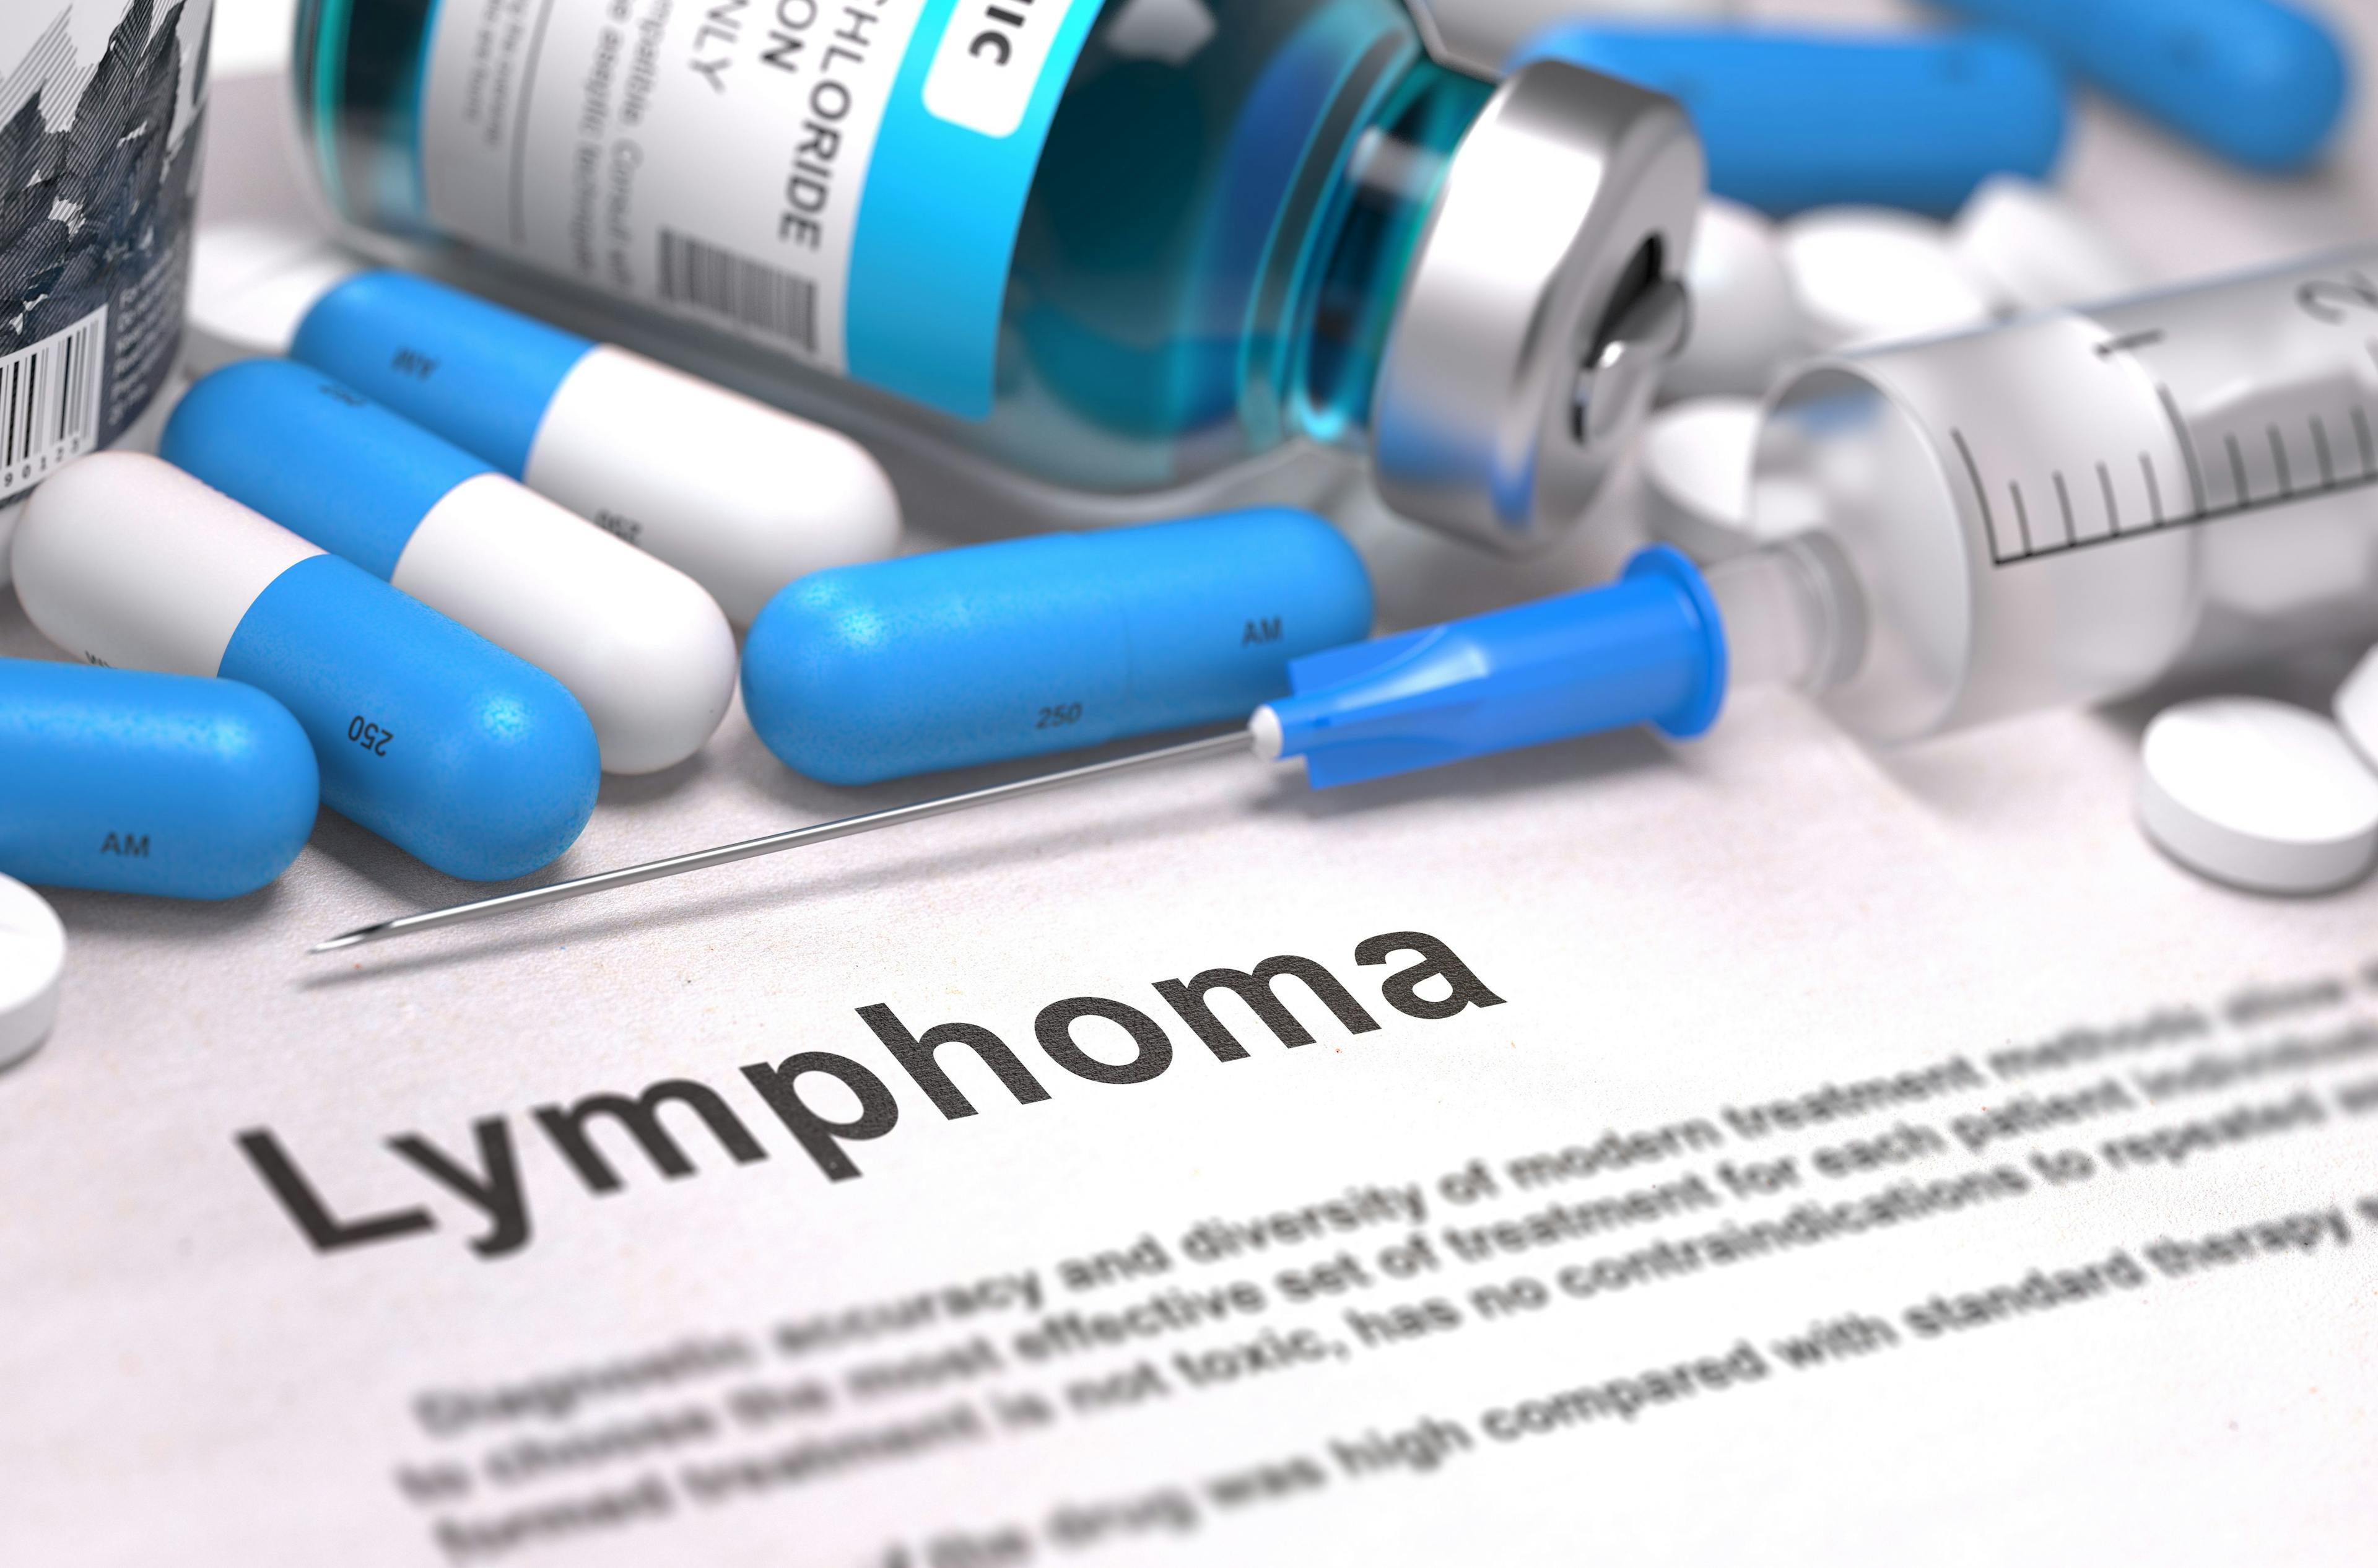 Lymphoma diagnosis -- Image credit: tashatuvango | stock.adobe.com